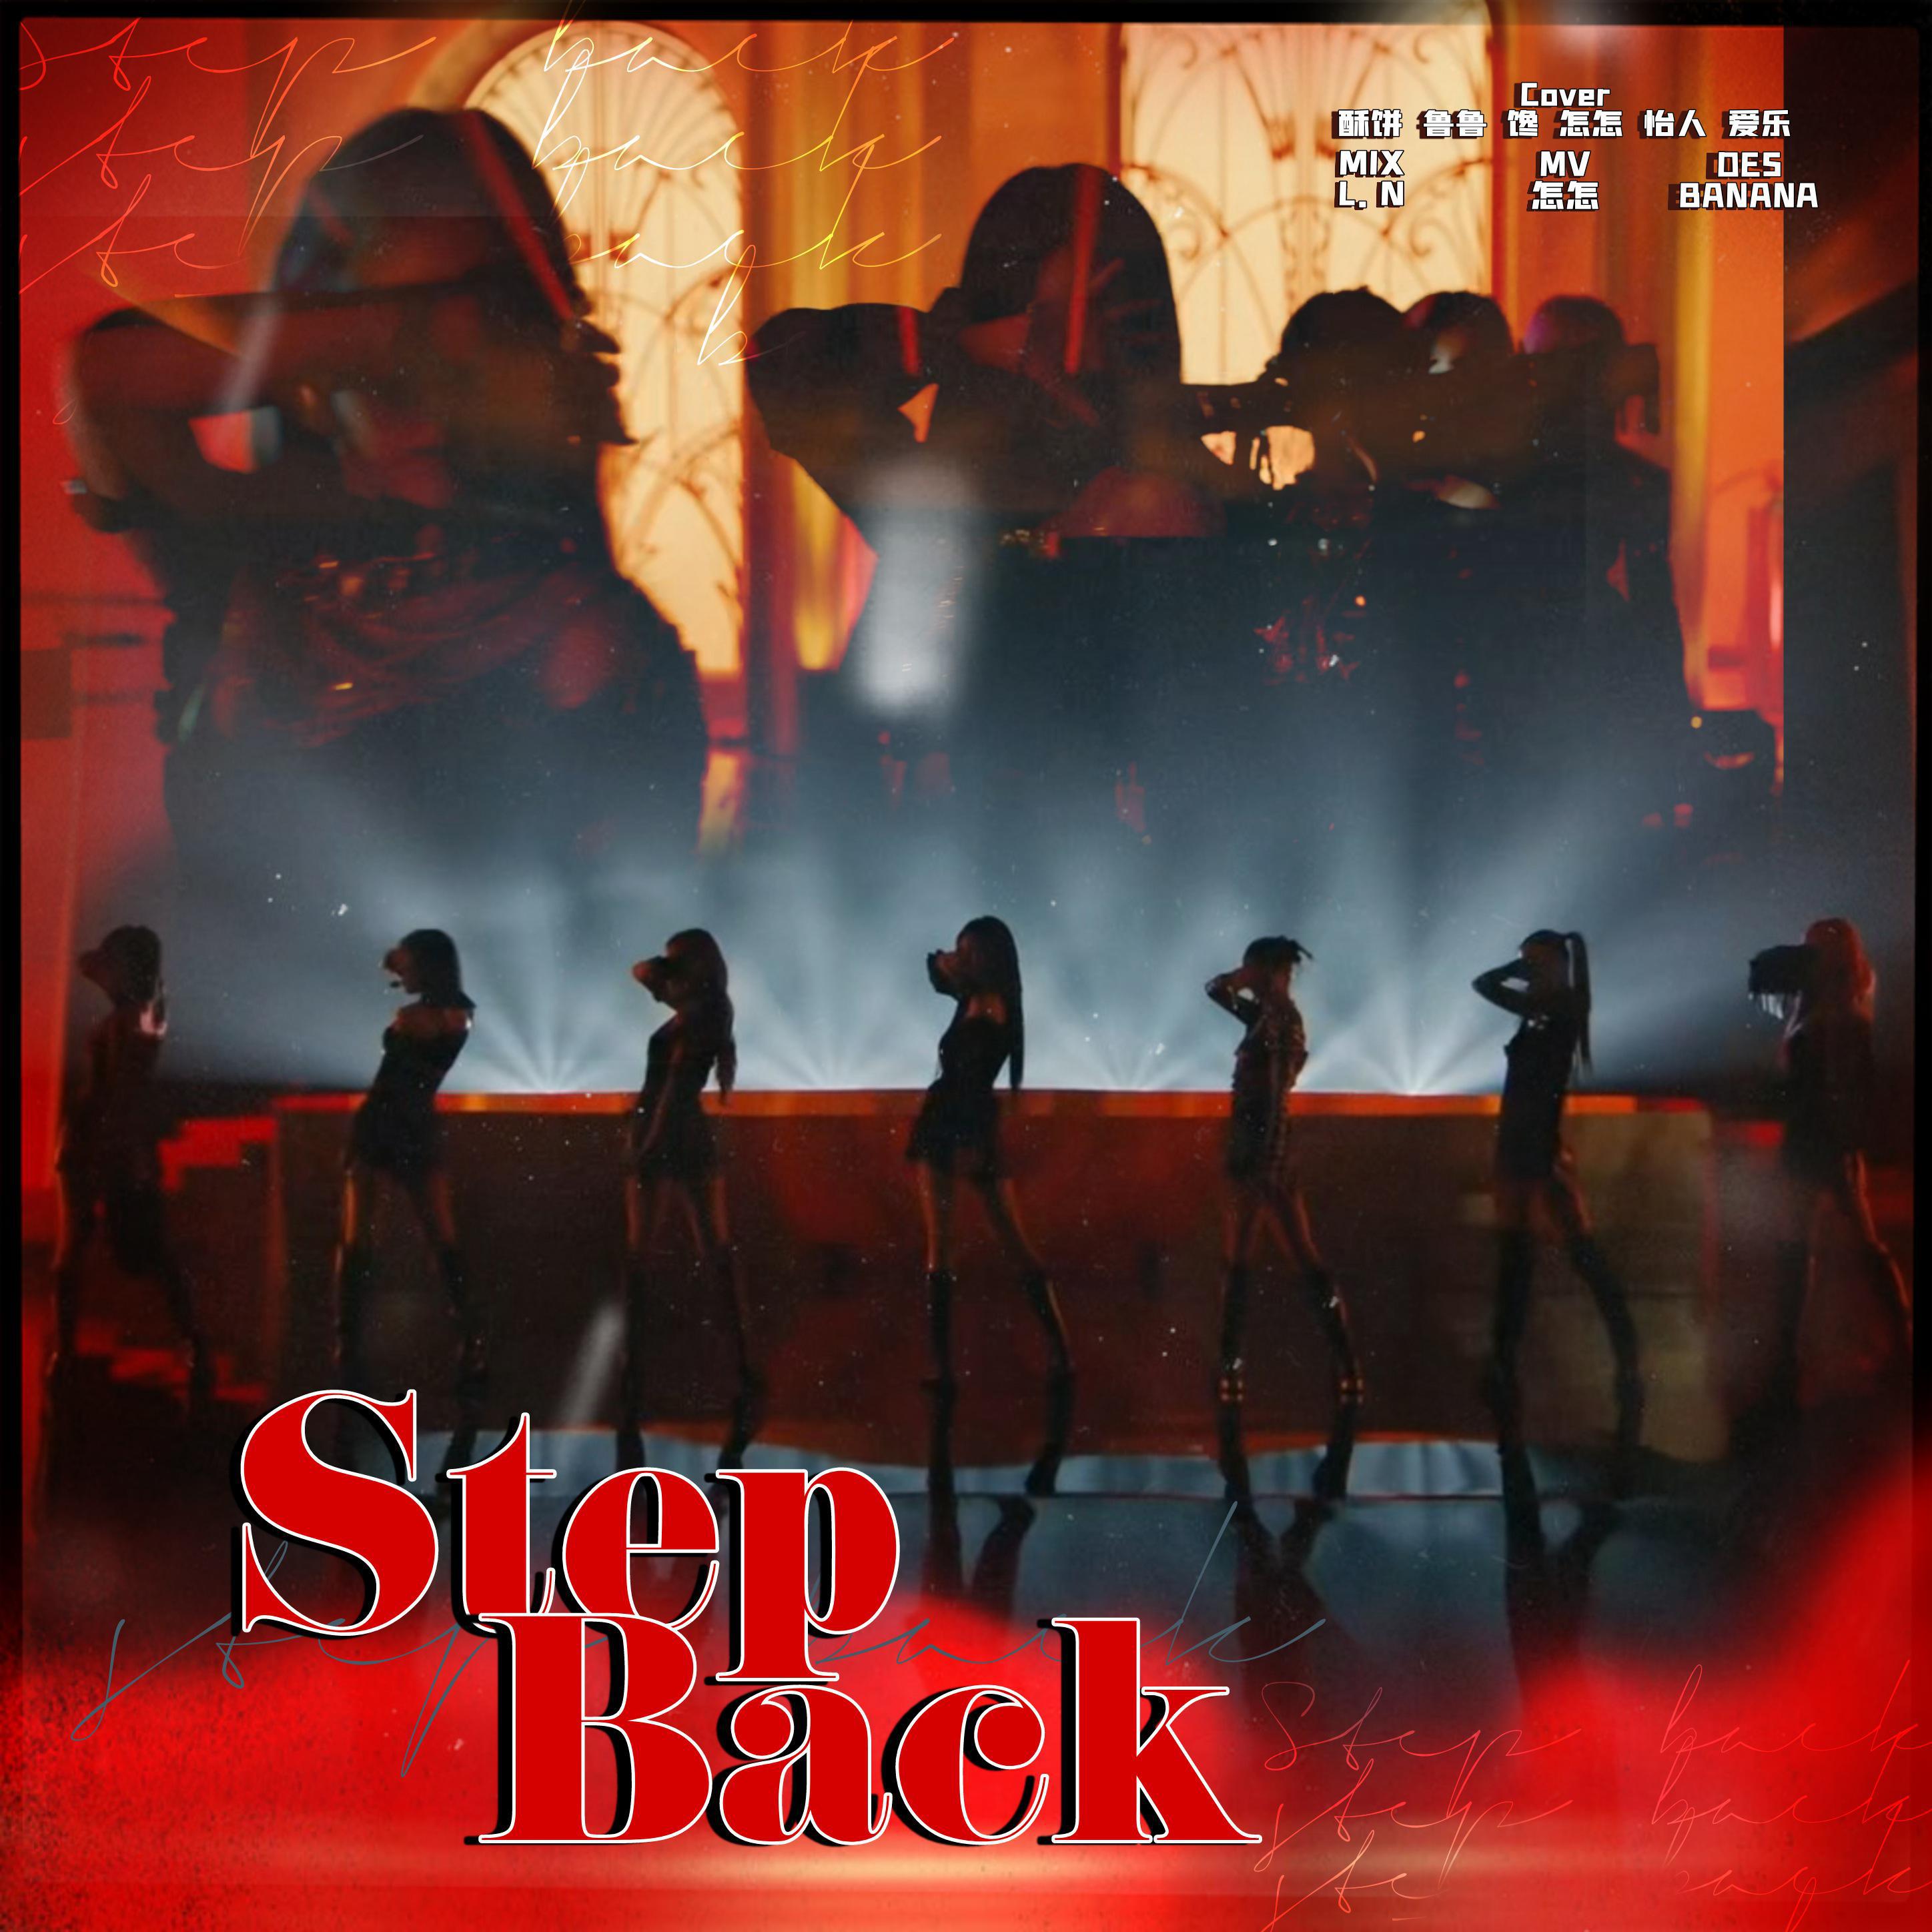 Subzii - Step Back（ 翻自GOT the beat）